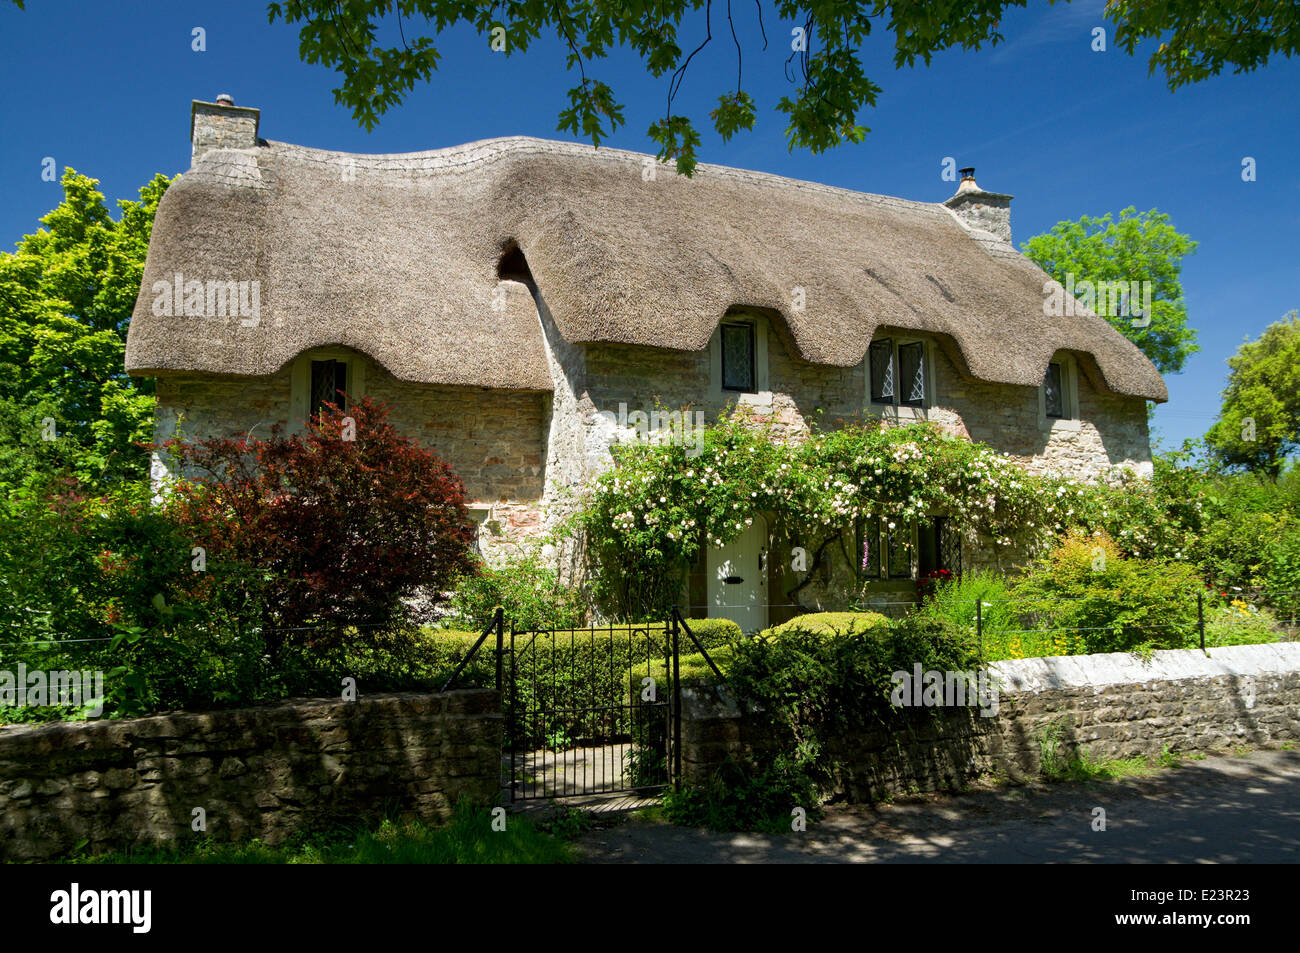 Thatched Cottage, Merthyr Mawr, Bridgend, South Wales. UK. Stock Photo